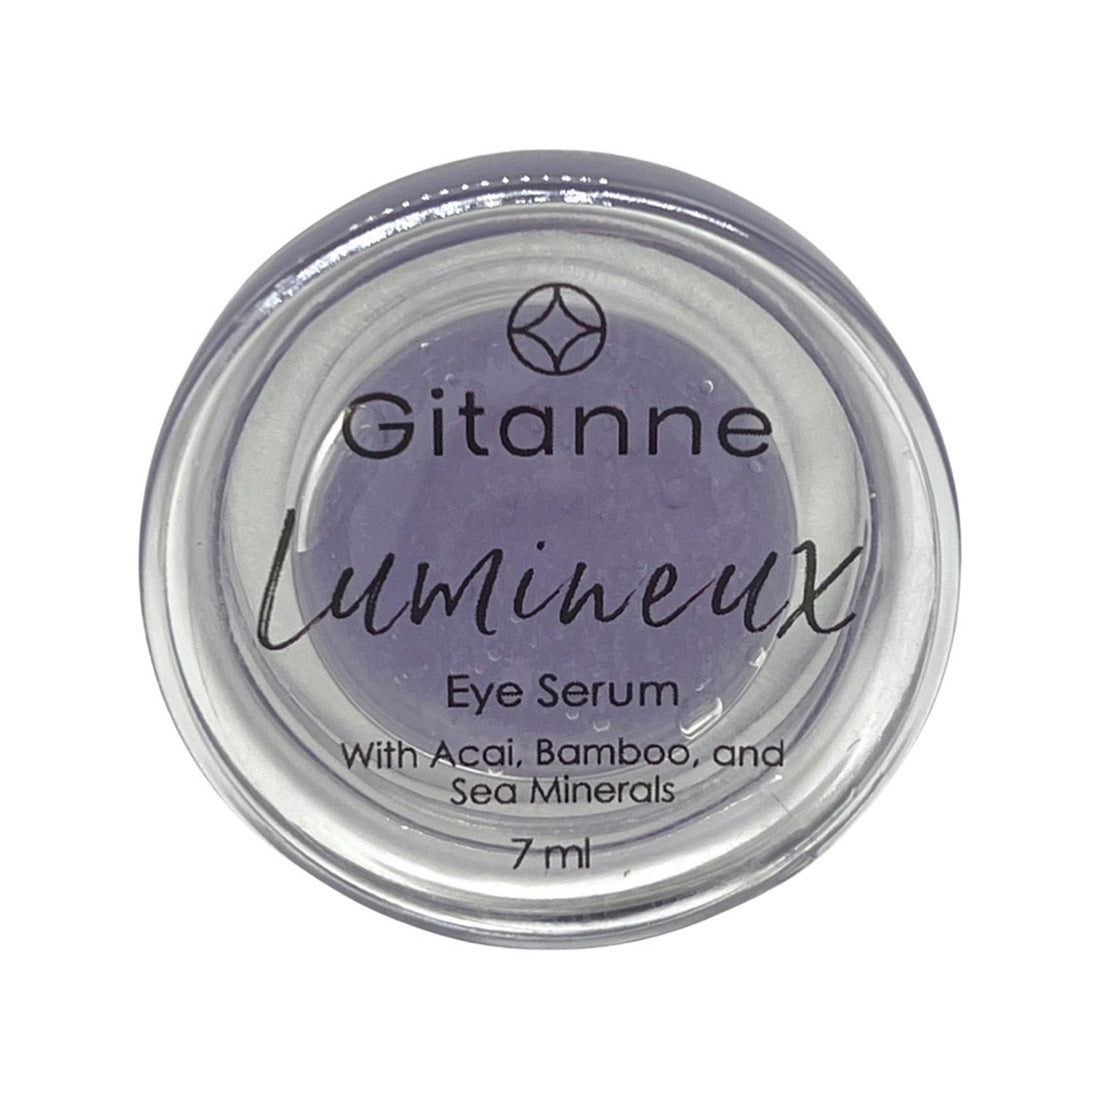 Gitanne Skincare Lumineux Plumping Eye Serum reduces fine lines and dark circles around eyes.